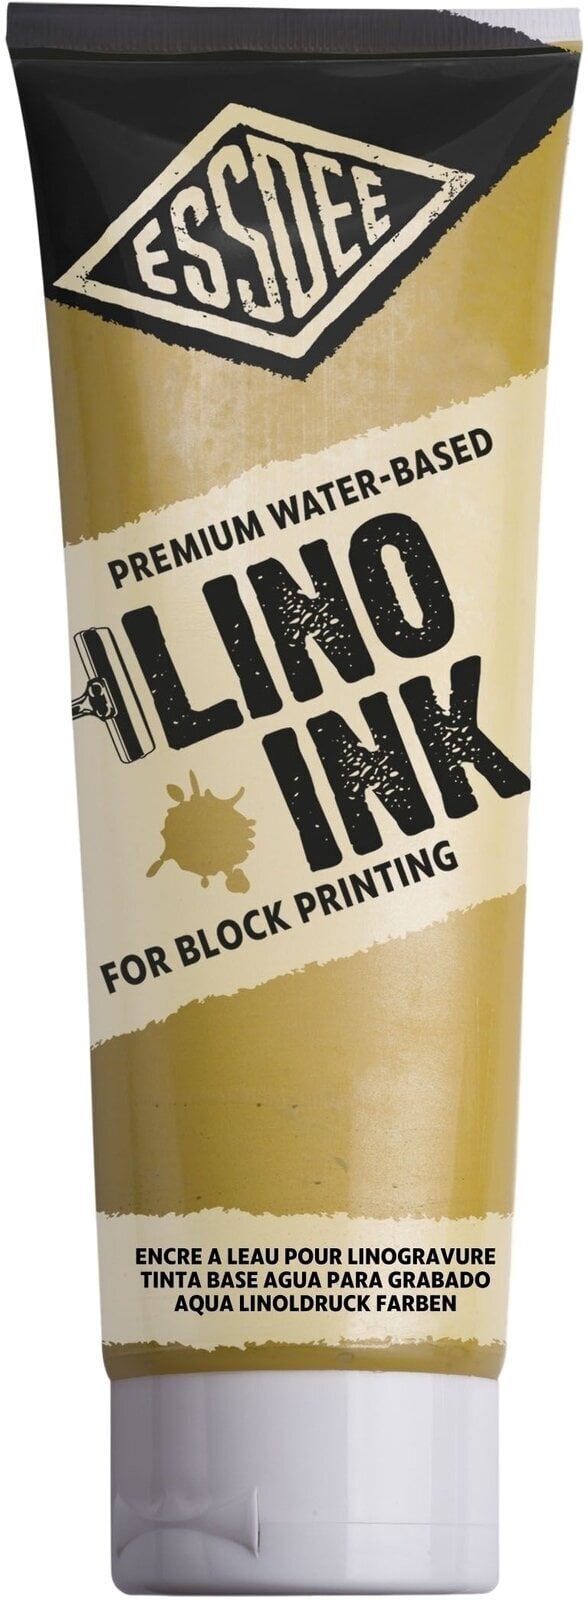 Verf voor linosnede Essdee Block Printing Ink Verf voor linosnede Pearlescent Yellow 300 ml